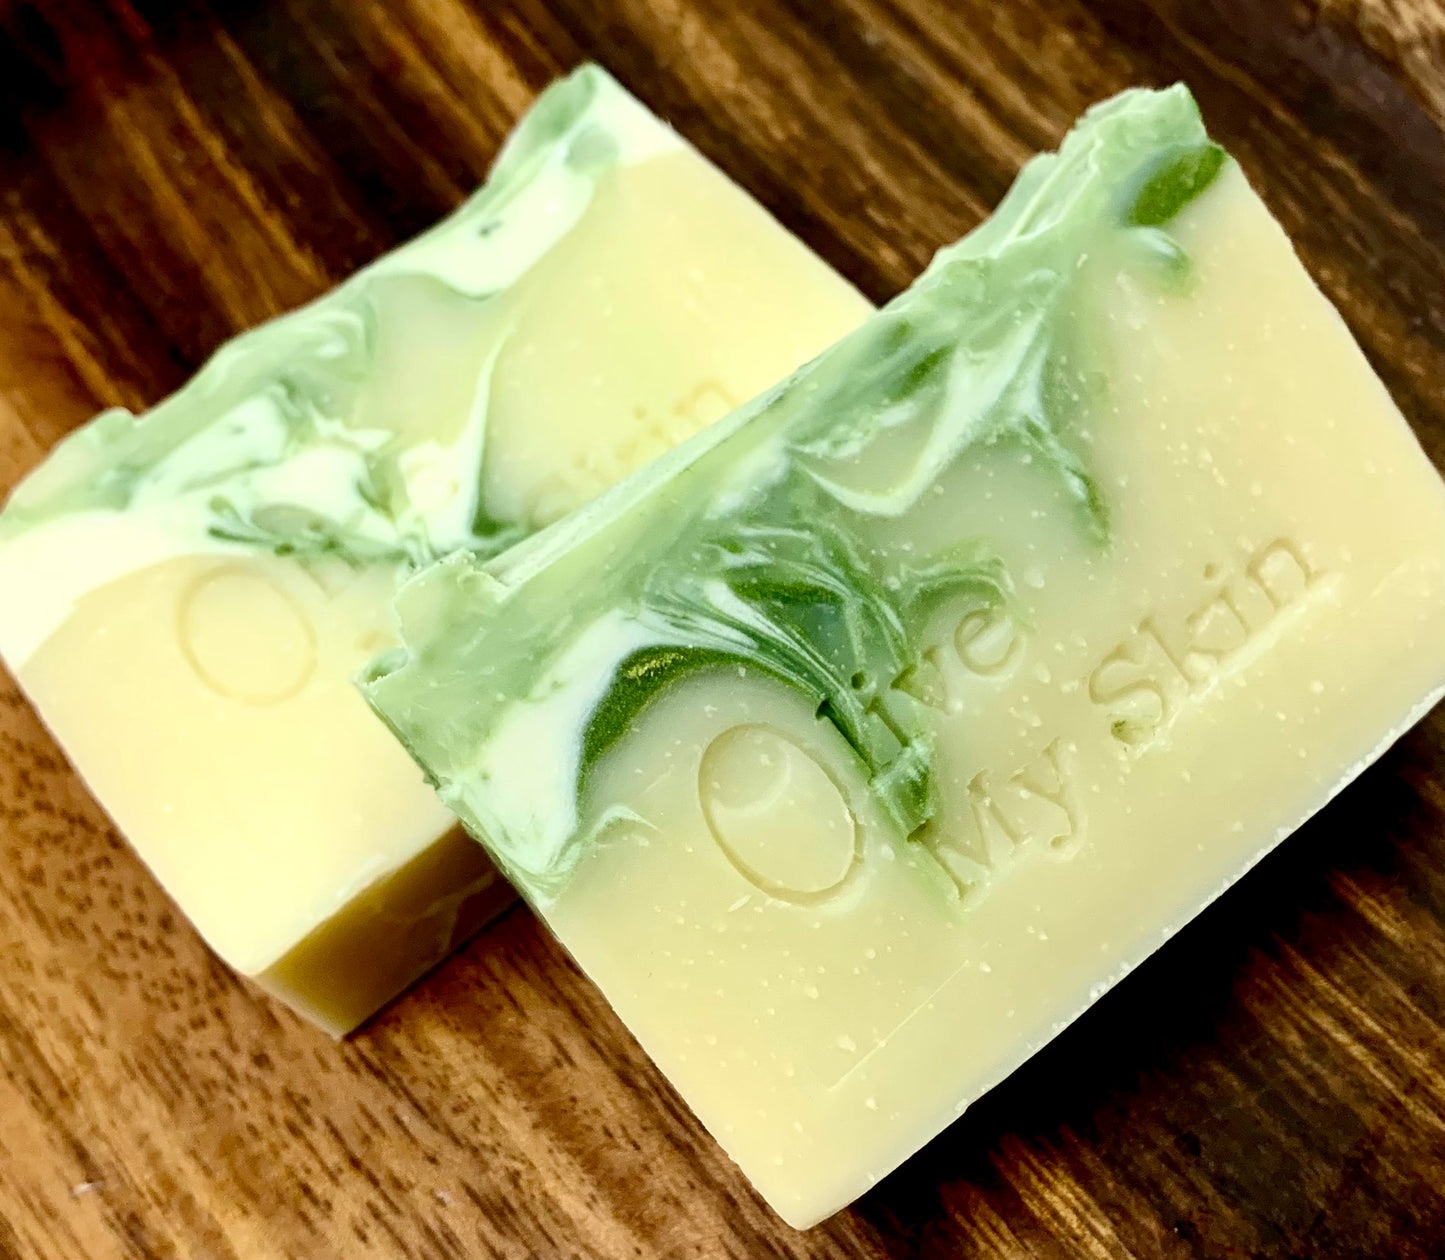 Handmade Soap Bar